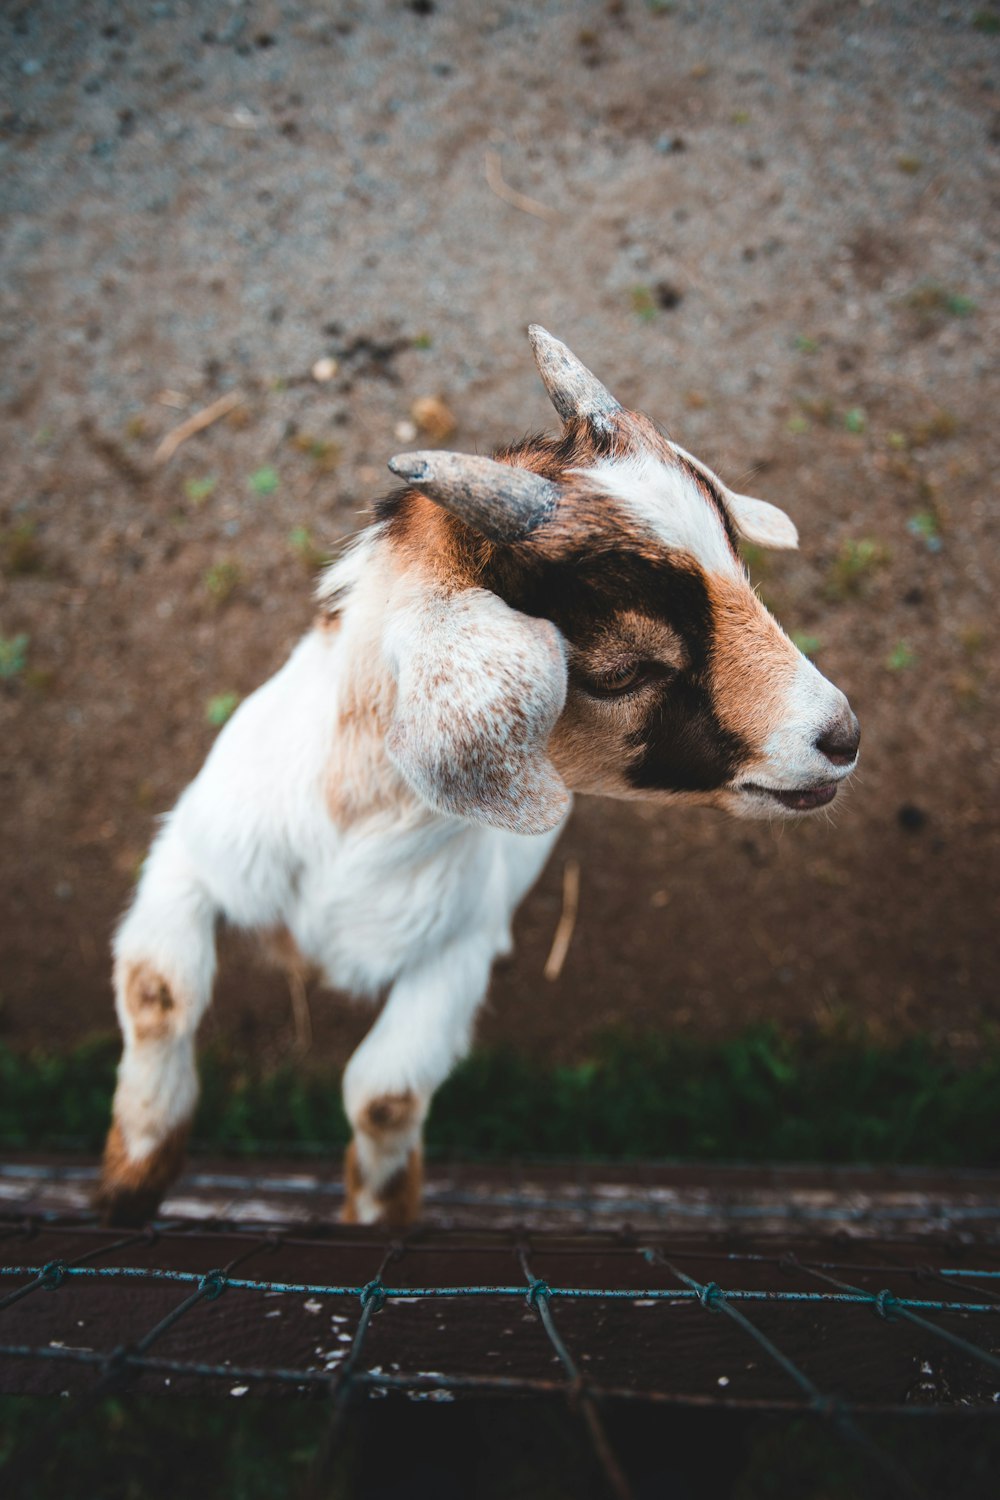 a goat walking on a dirt path